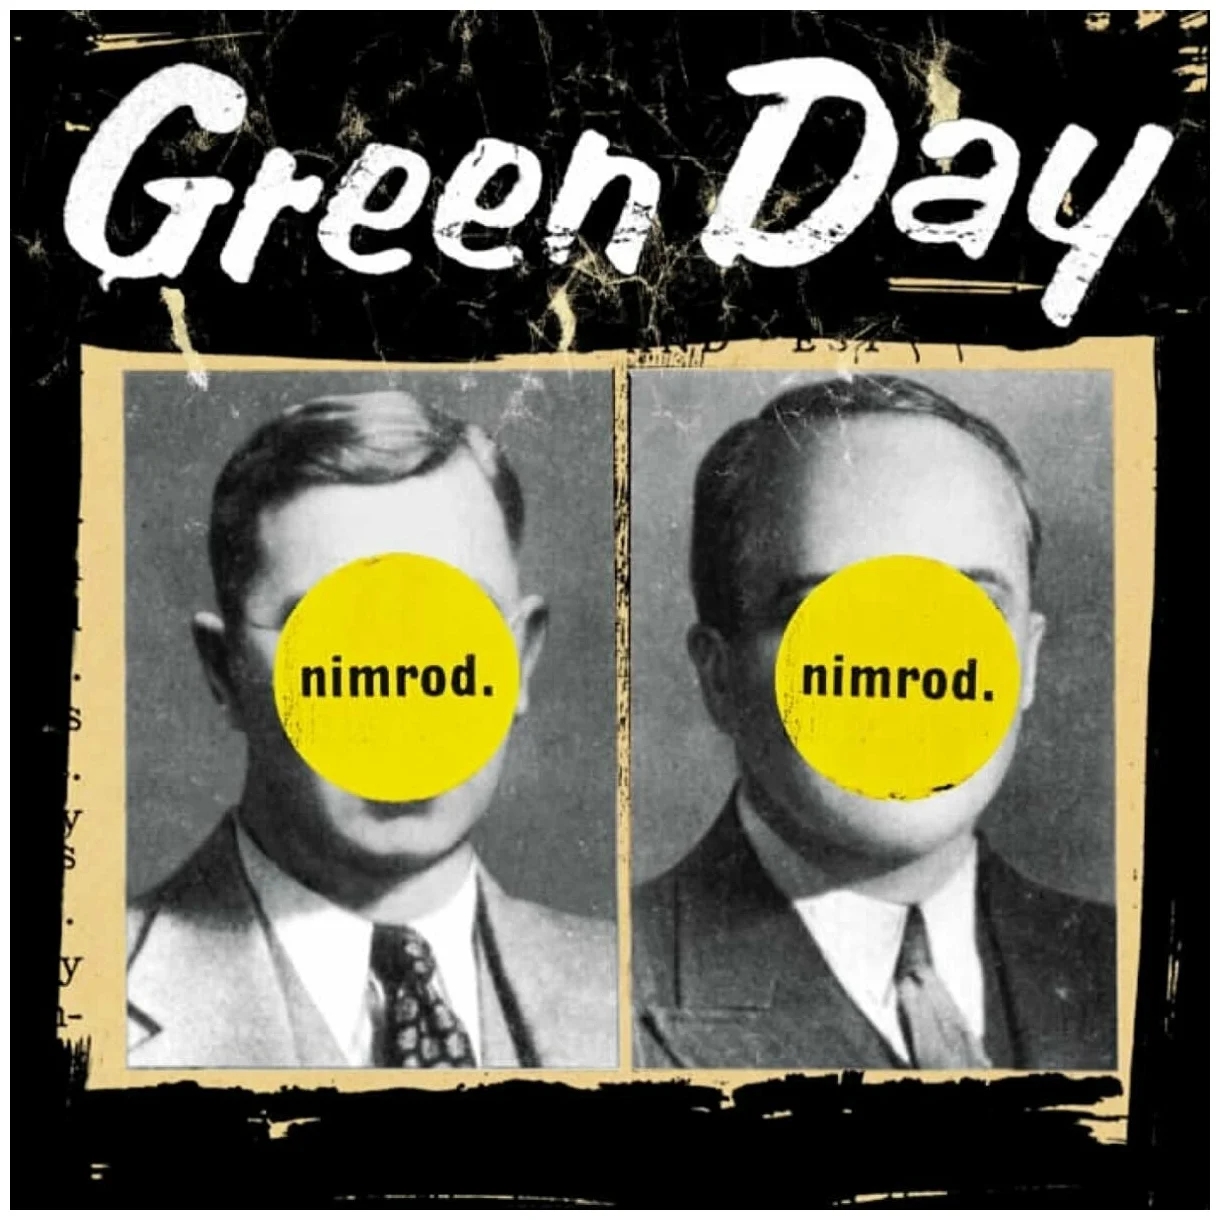 Виниловая Пластинка Green Day, Nimrod (0093624873006) виниловая пластинка public enemy 25th anniversary vinyl collection 180g limited edition box set 9 lp